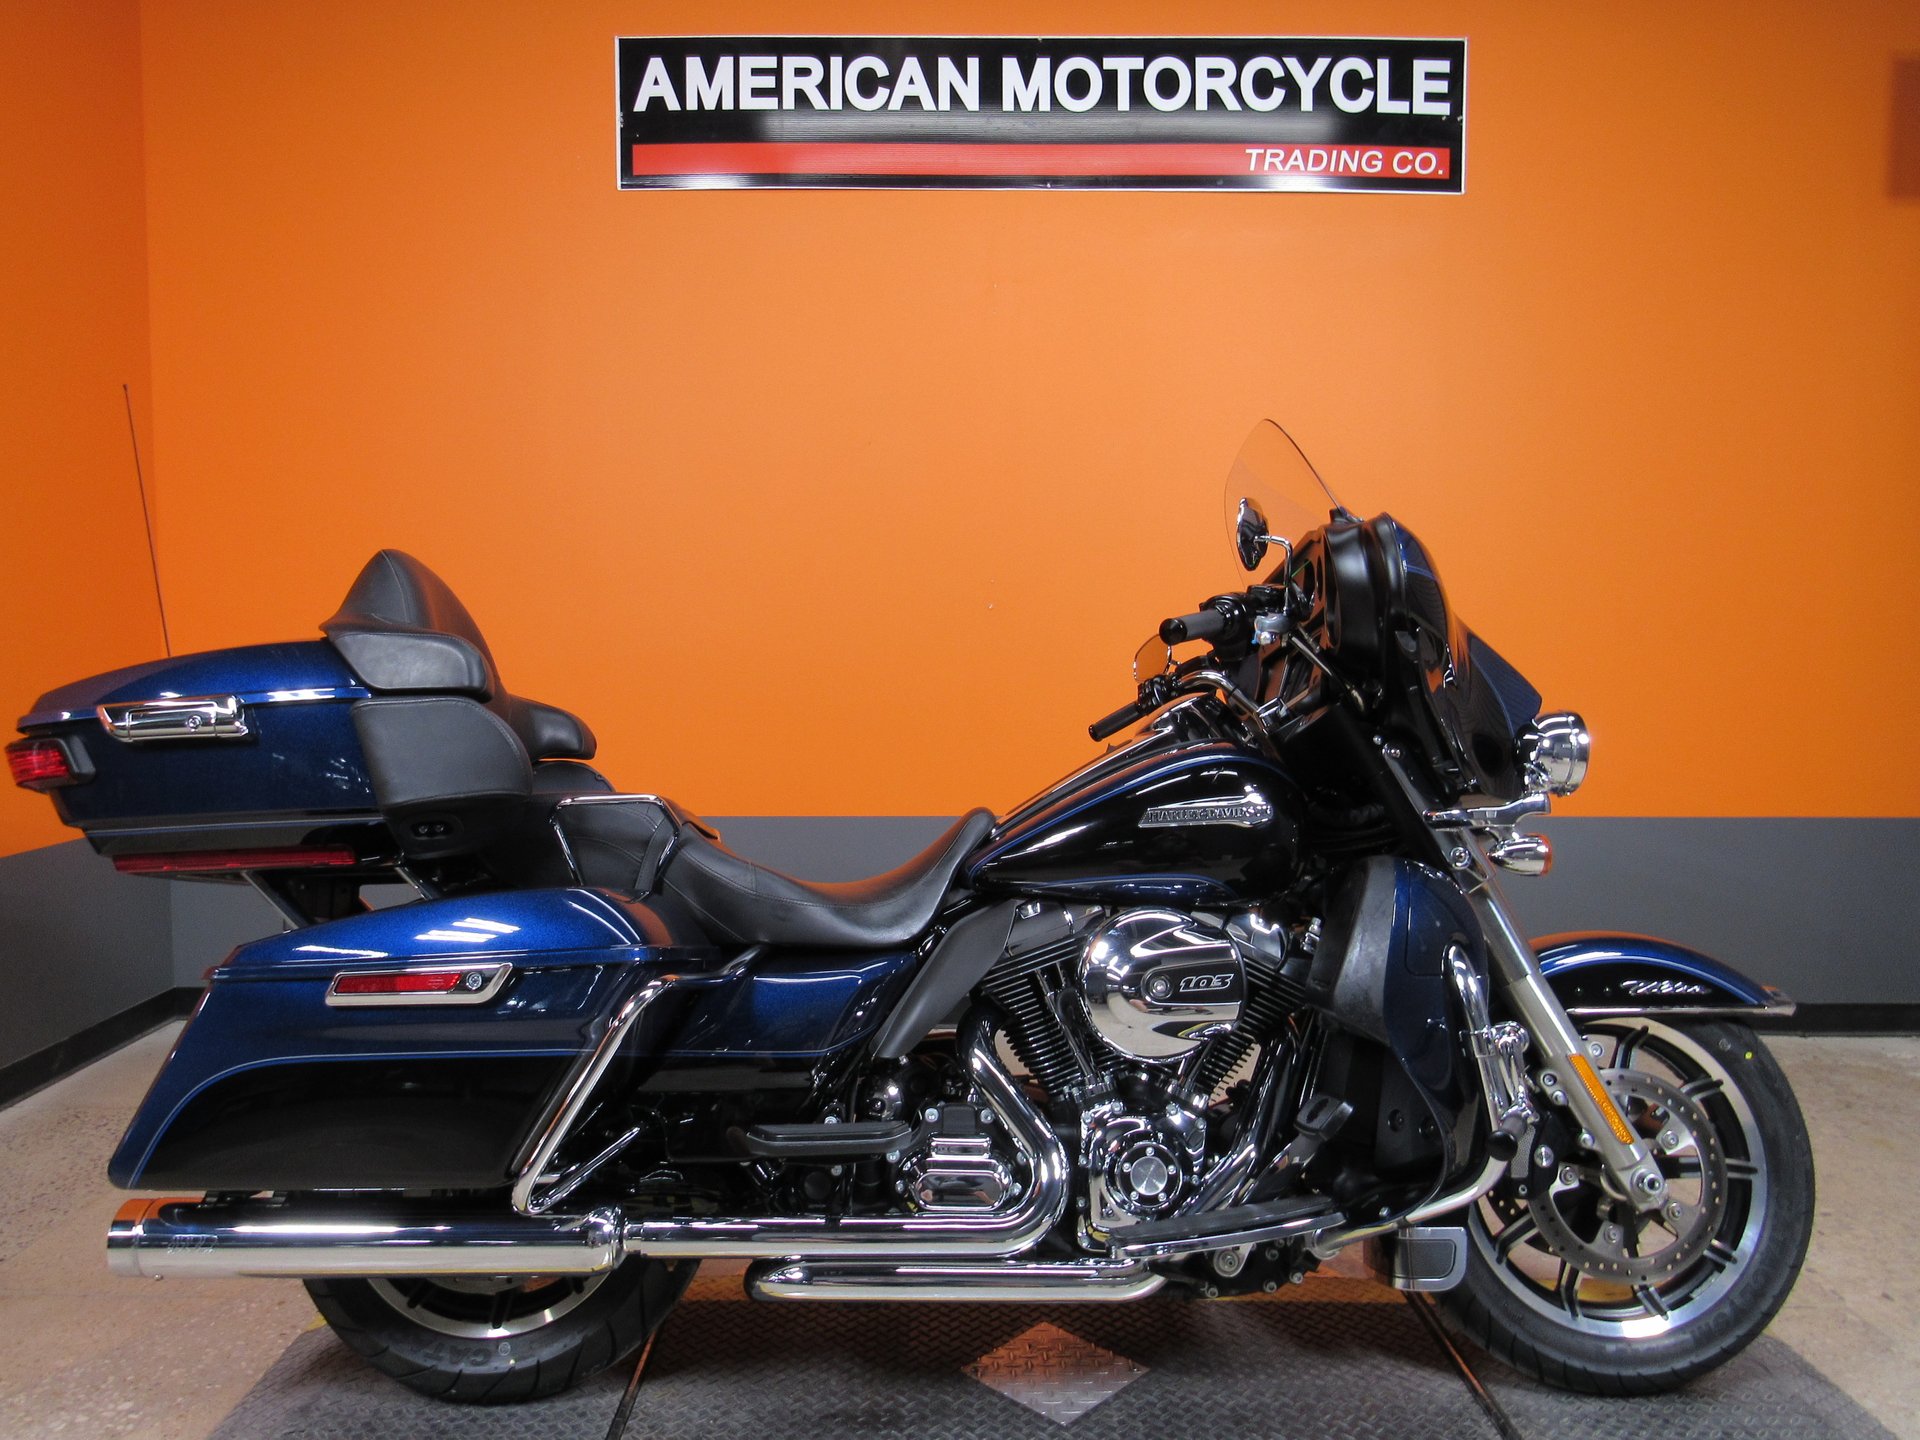 2014 Harley Davidson Ultra Classic American Motorcycle Trading Company Used Harley Davidson Motorcycles